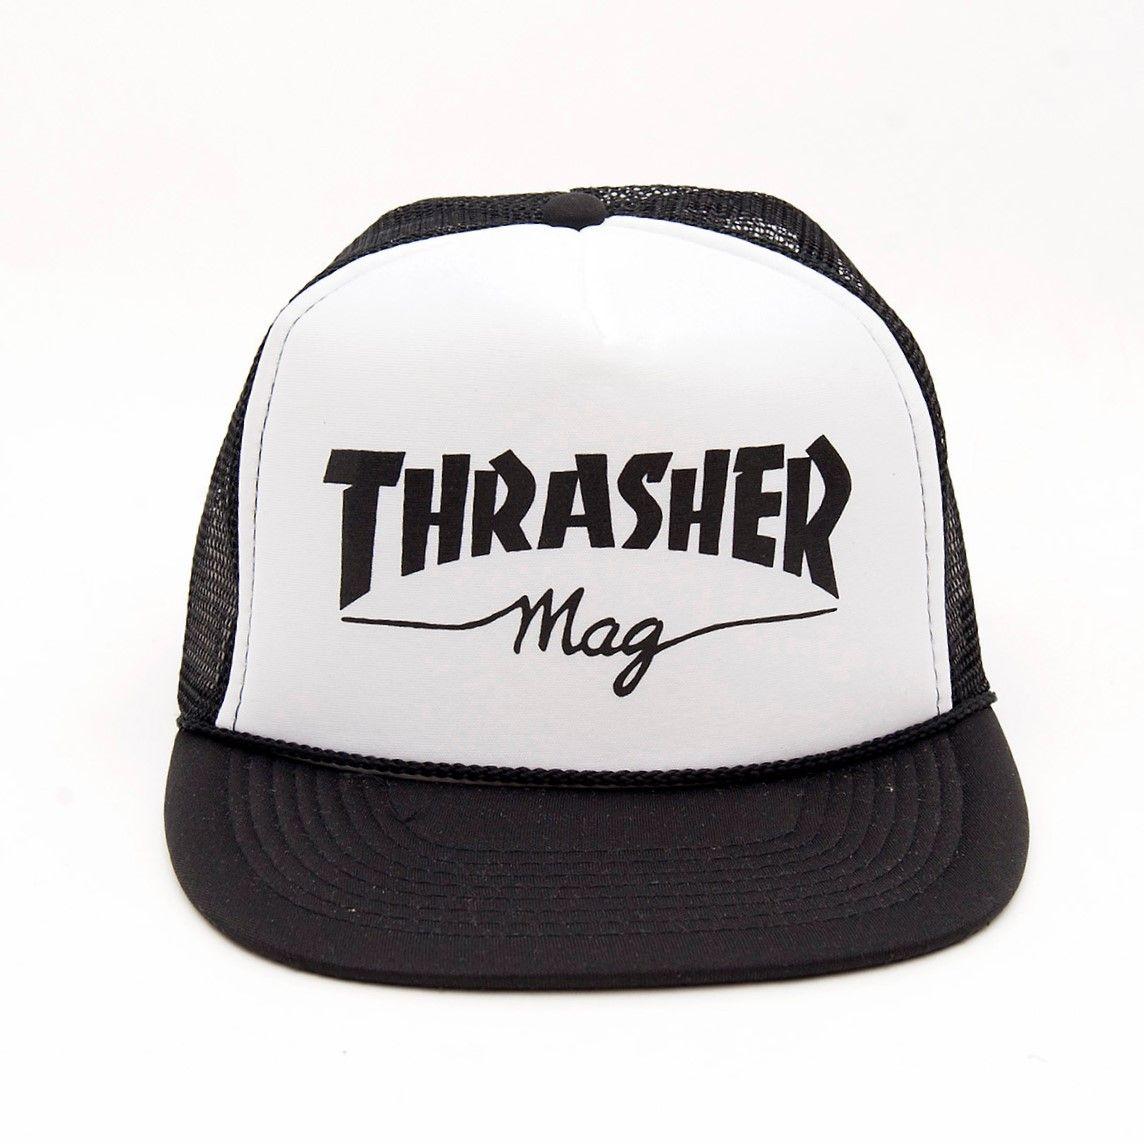 Thrasher Mag Logo - THRASHER MAG LOGO PRINTED MESH CAP - HEADWEAR-Snapback : Insiders ...